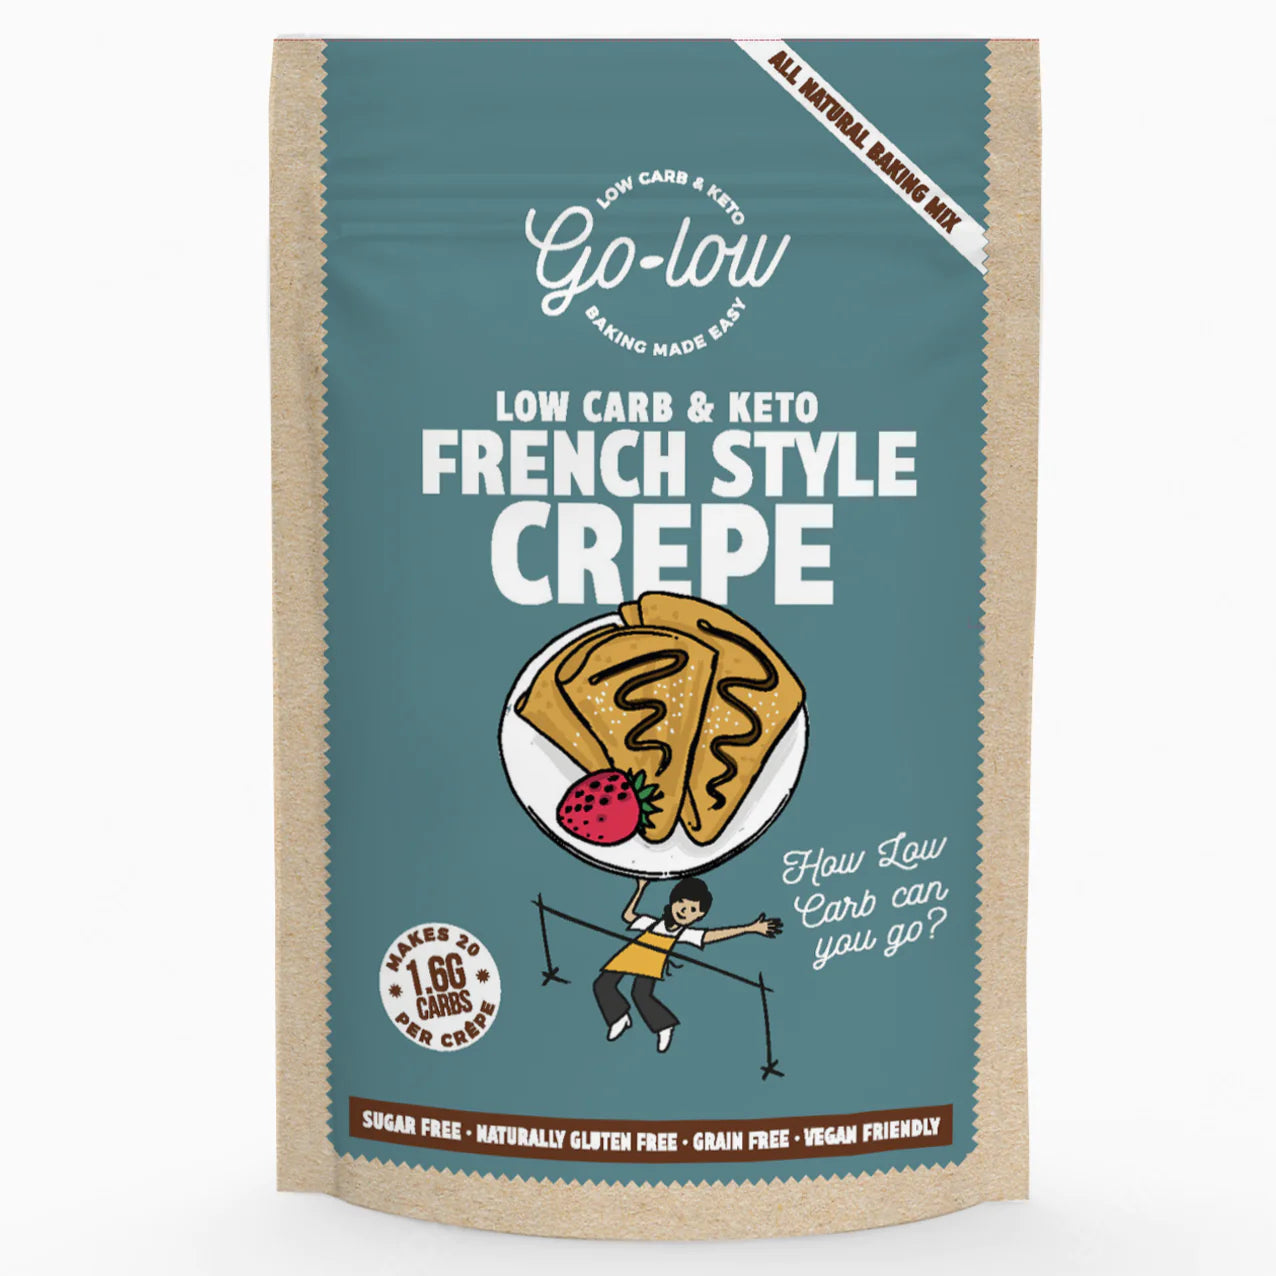 Keto French Style Crepe Mix - 1.6g carbs per pancake